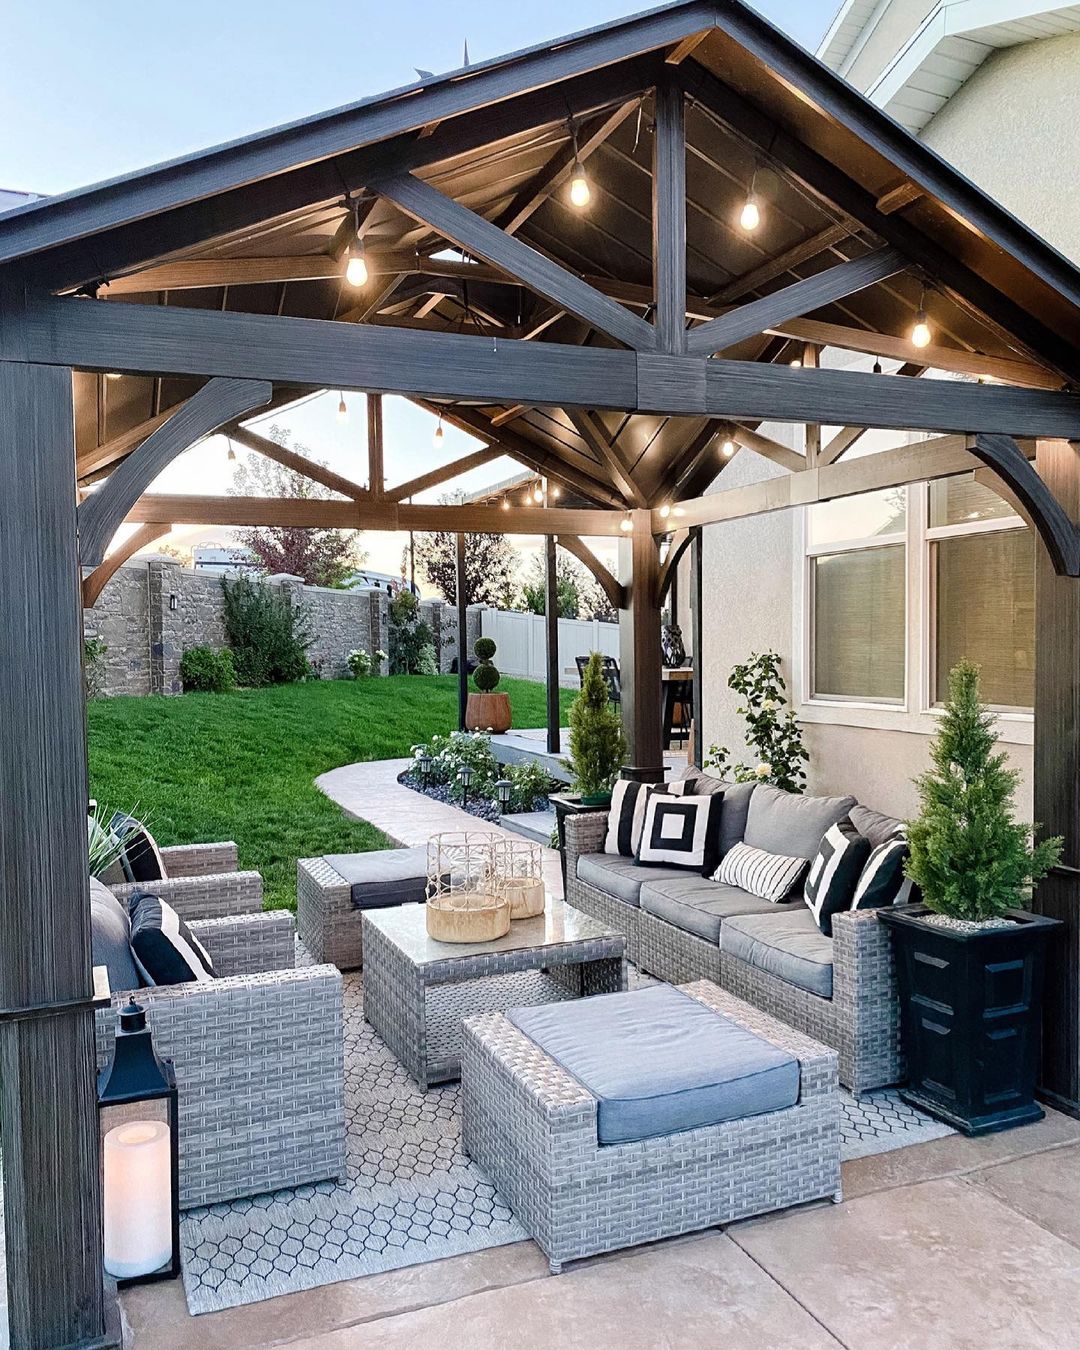 Backyard Pergola Installed Over Sitting Area. Photo by Instagram user @greybirchdesigns